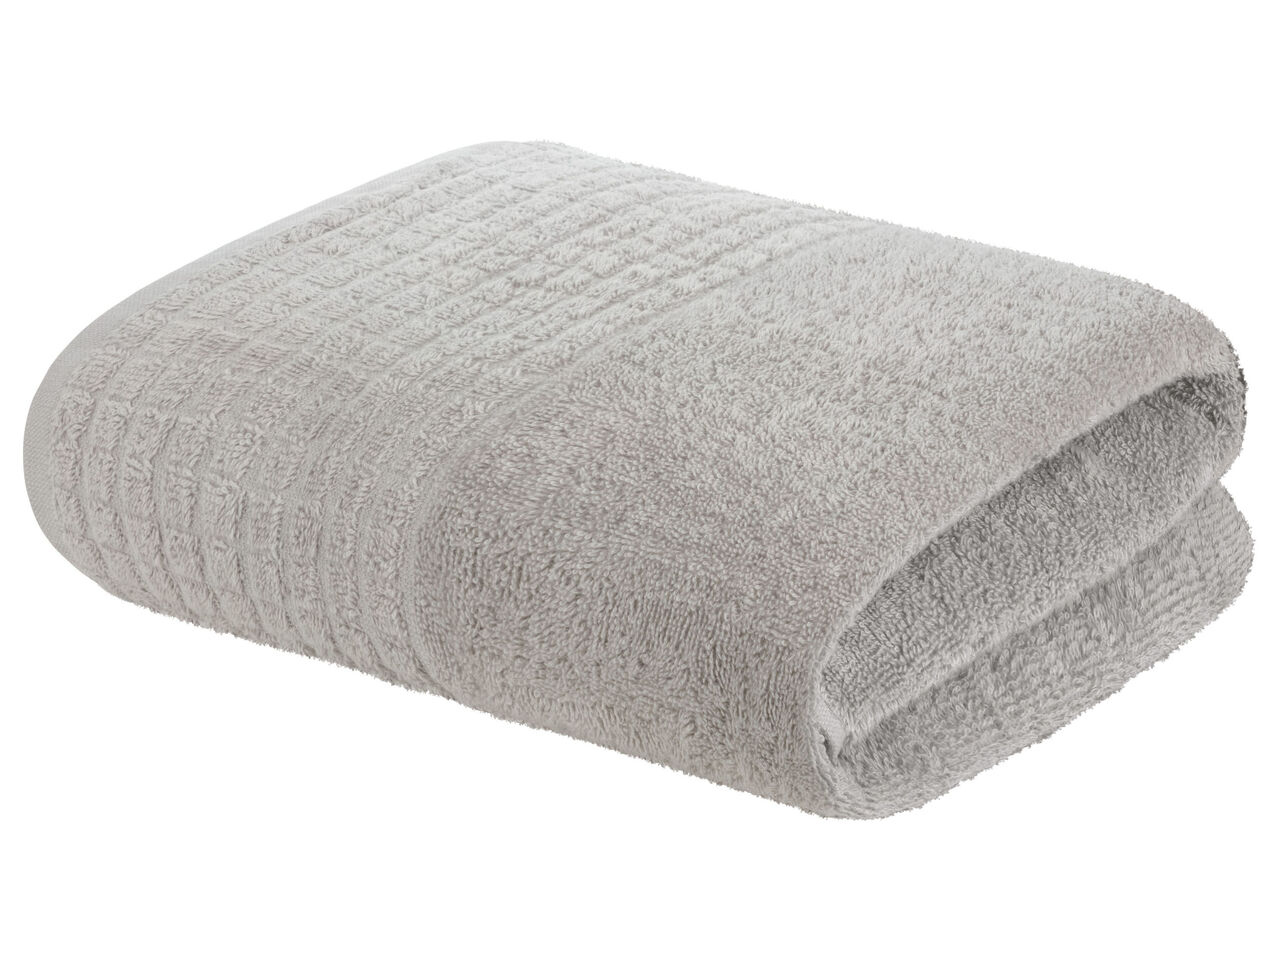 LIVARNO HOME® Ręczniki frotté 70 x 140 cm , cena 24,99 PLN 
LIVARNO HOME® Ręczniki ...